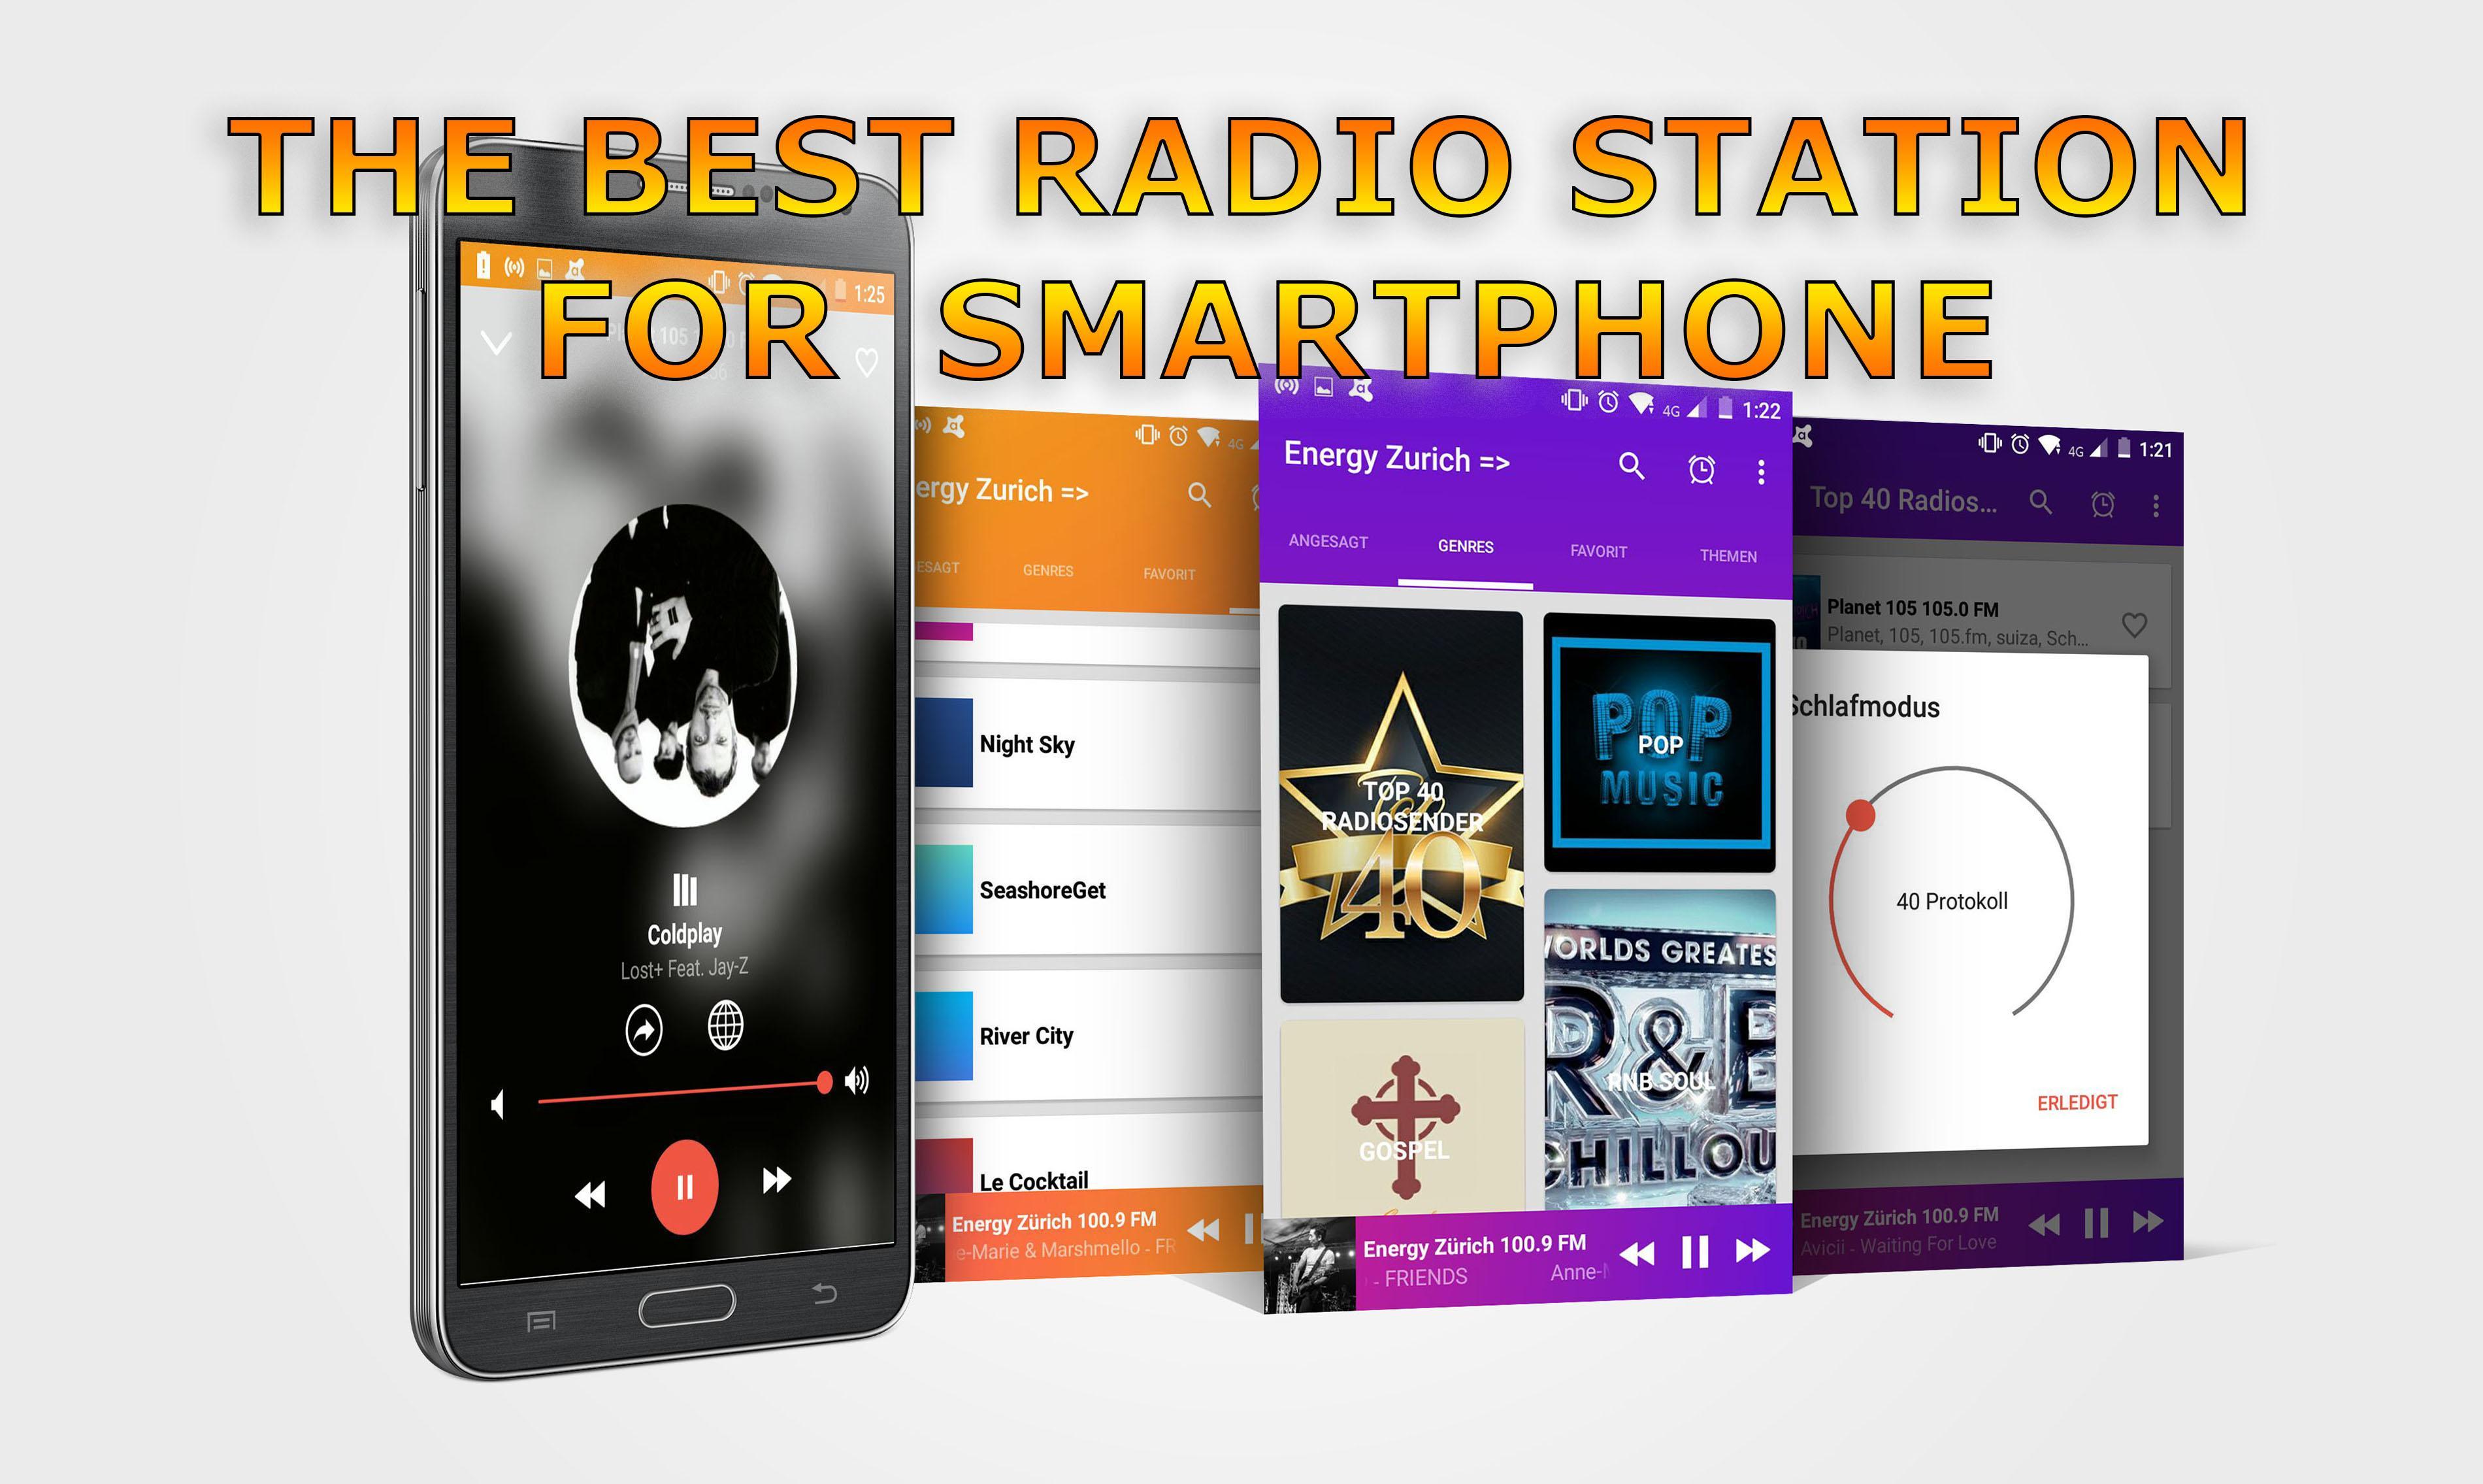 Radio Metro 106.8 FM for Android - APK Download